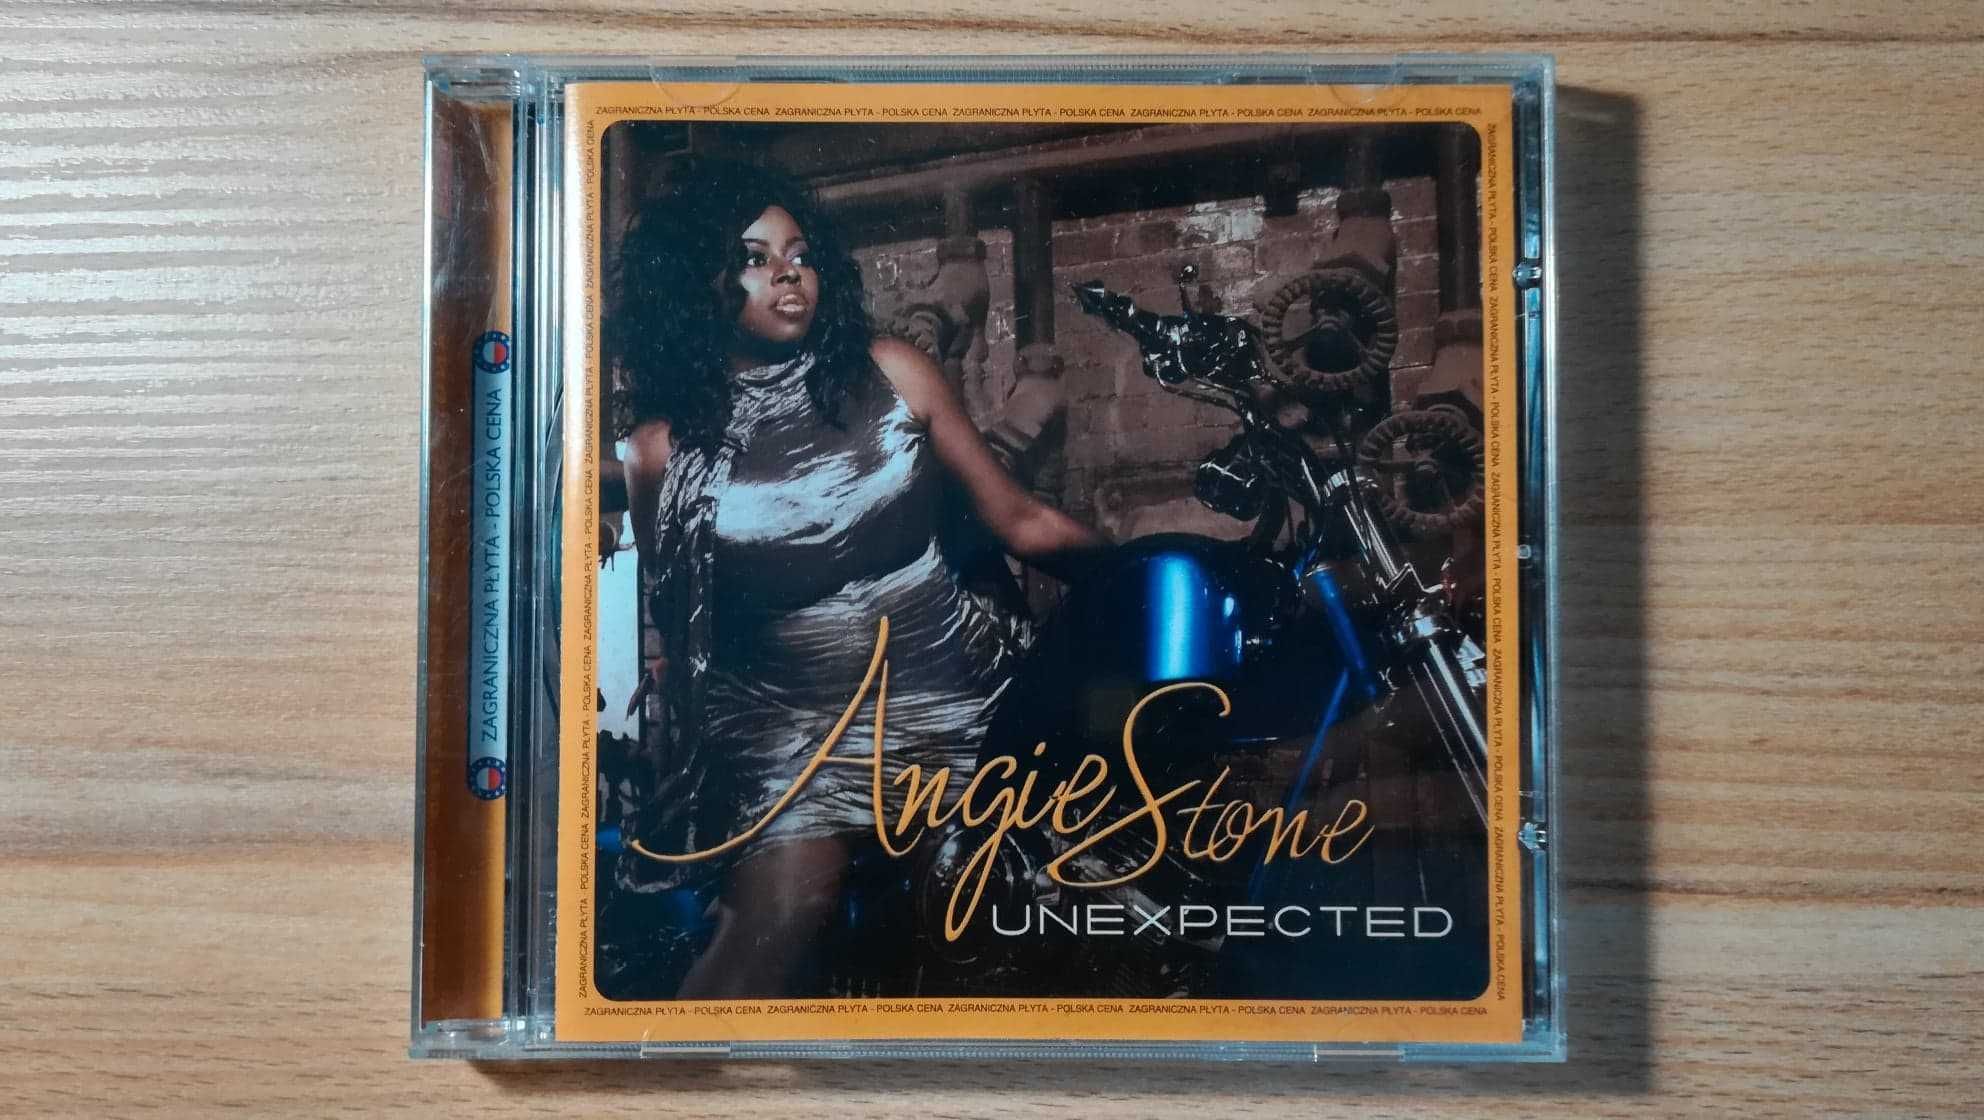 Płyta CD Angie Stone "Unexpected"